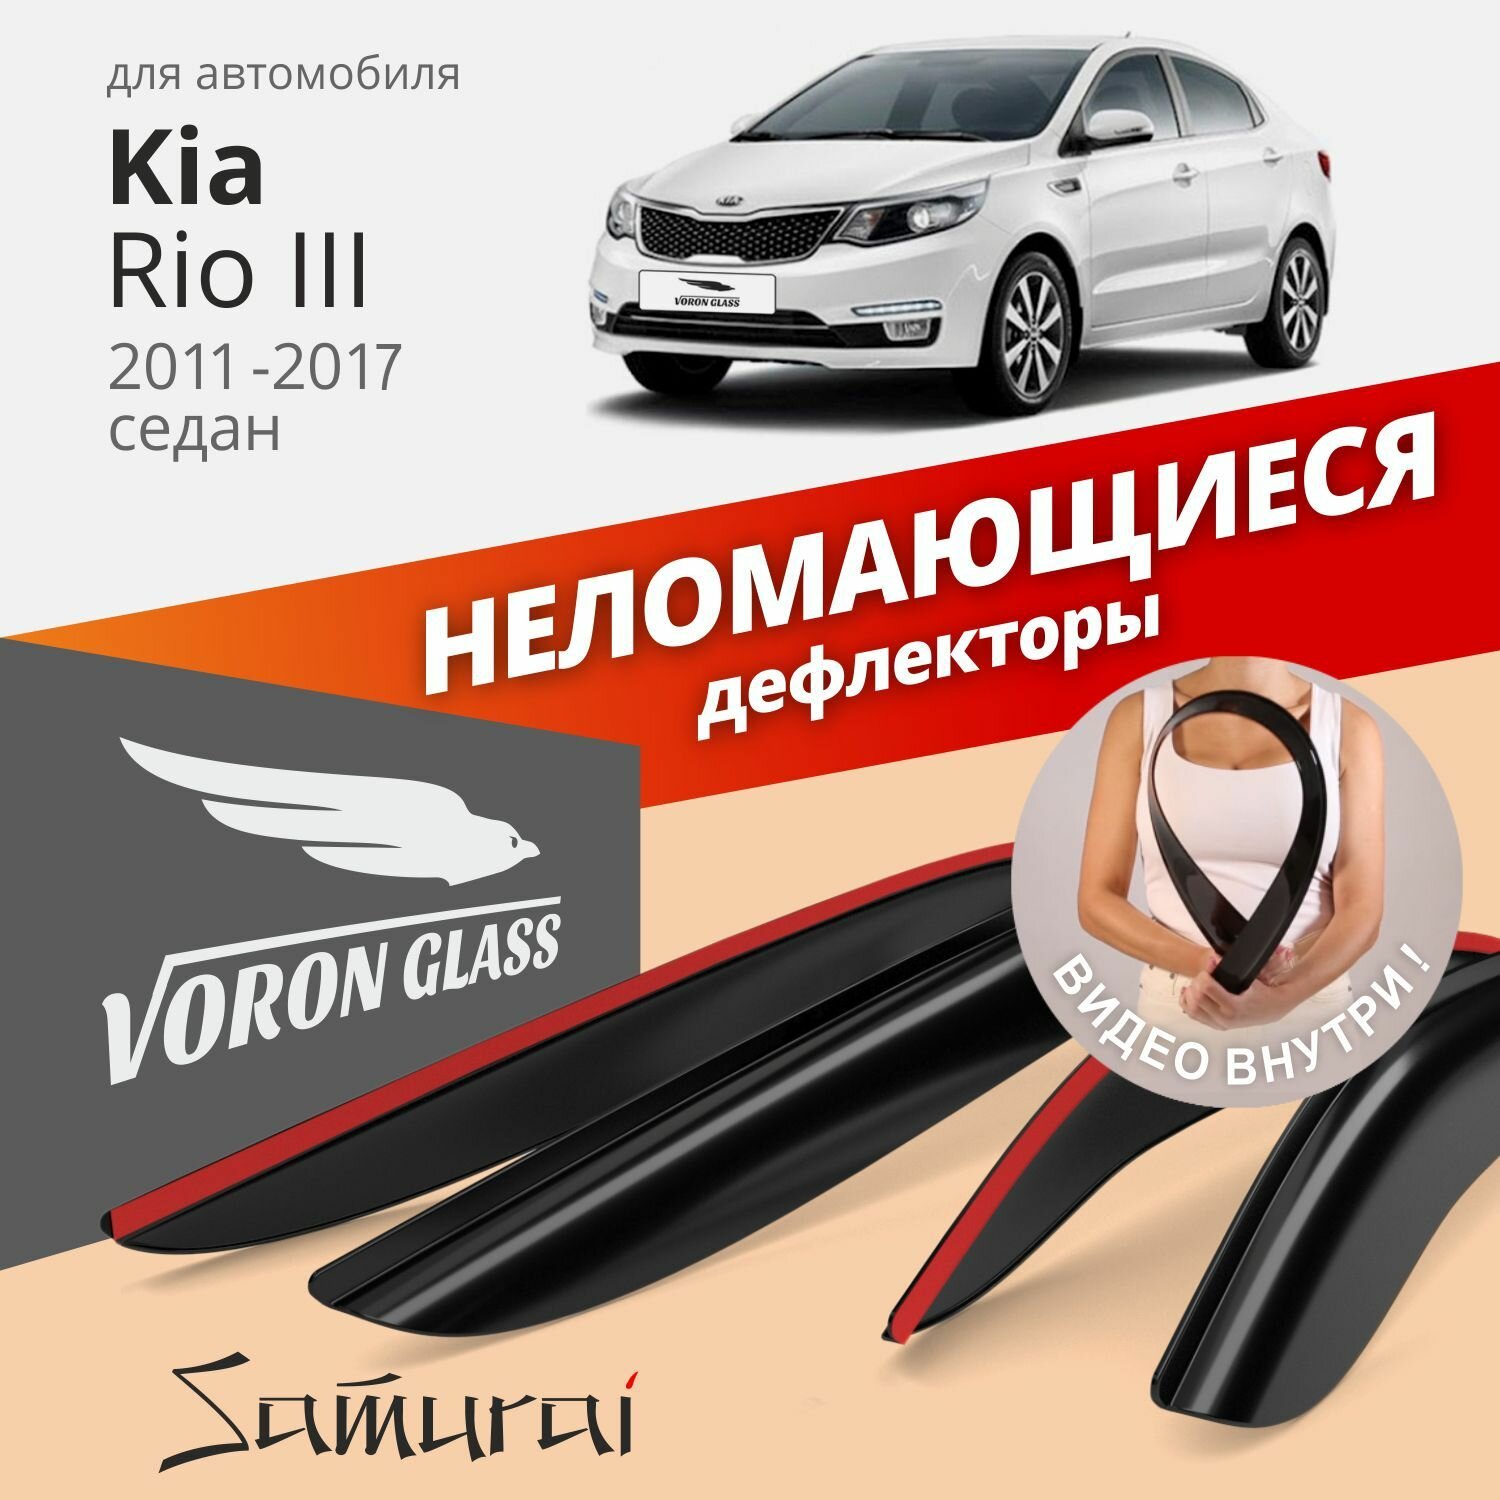 Дефлектор окон Voron Glass DEF00243 для Kia Rio